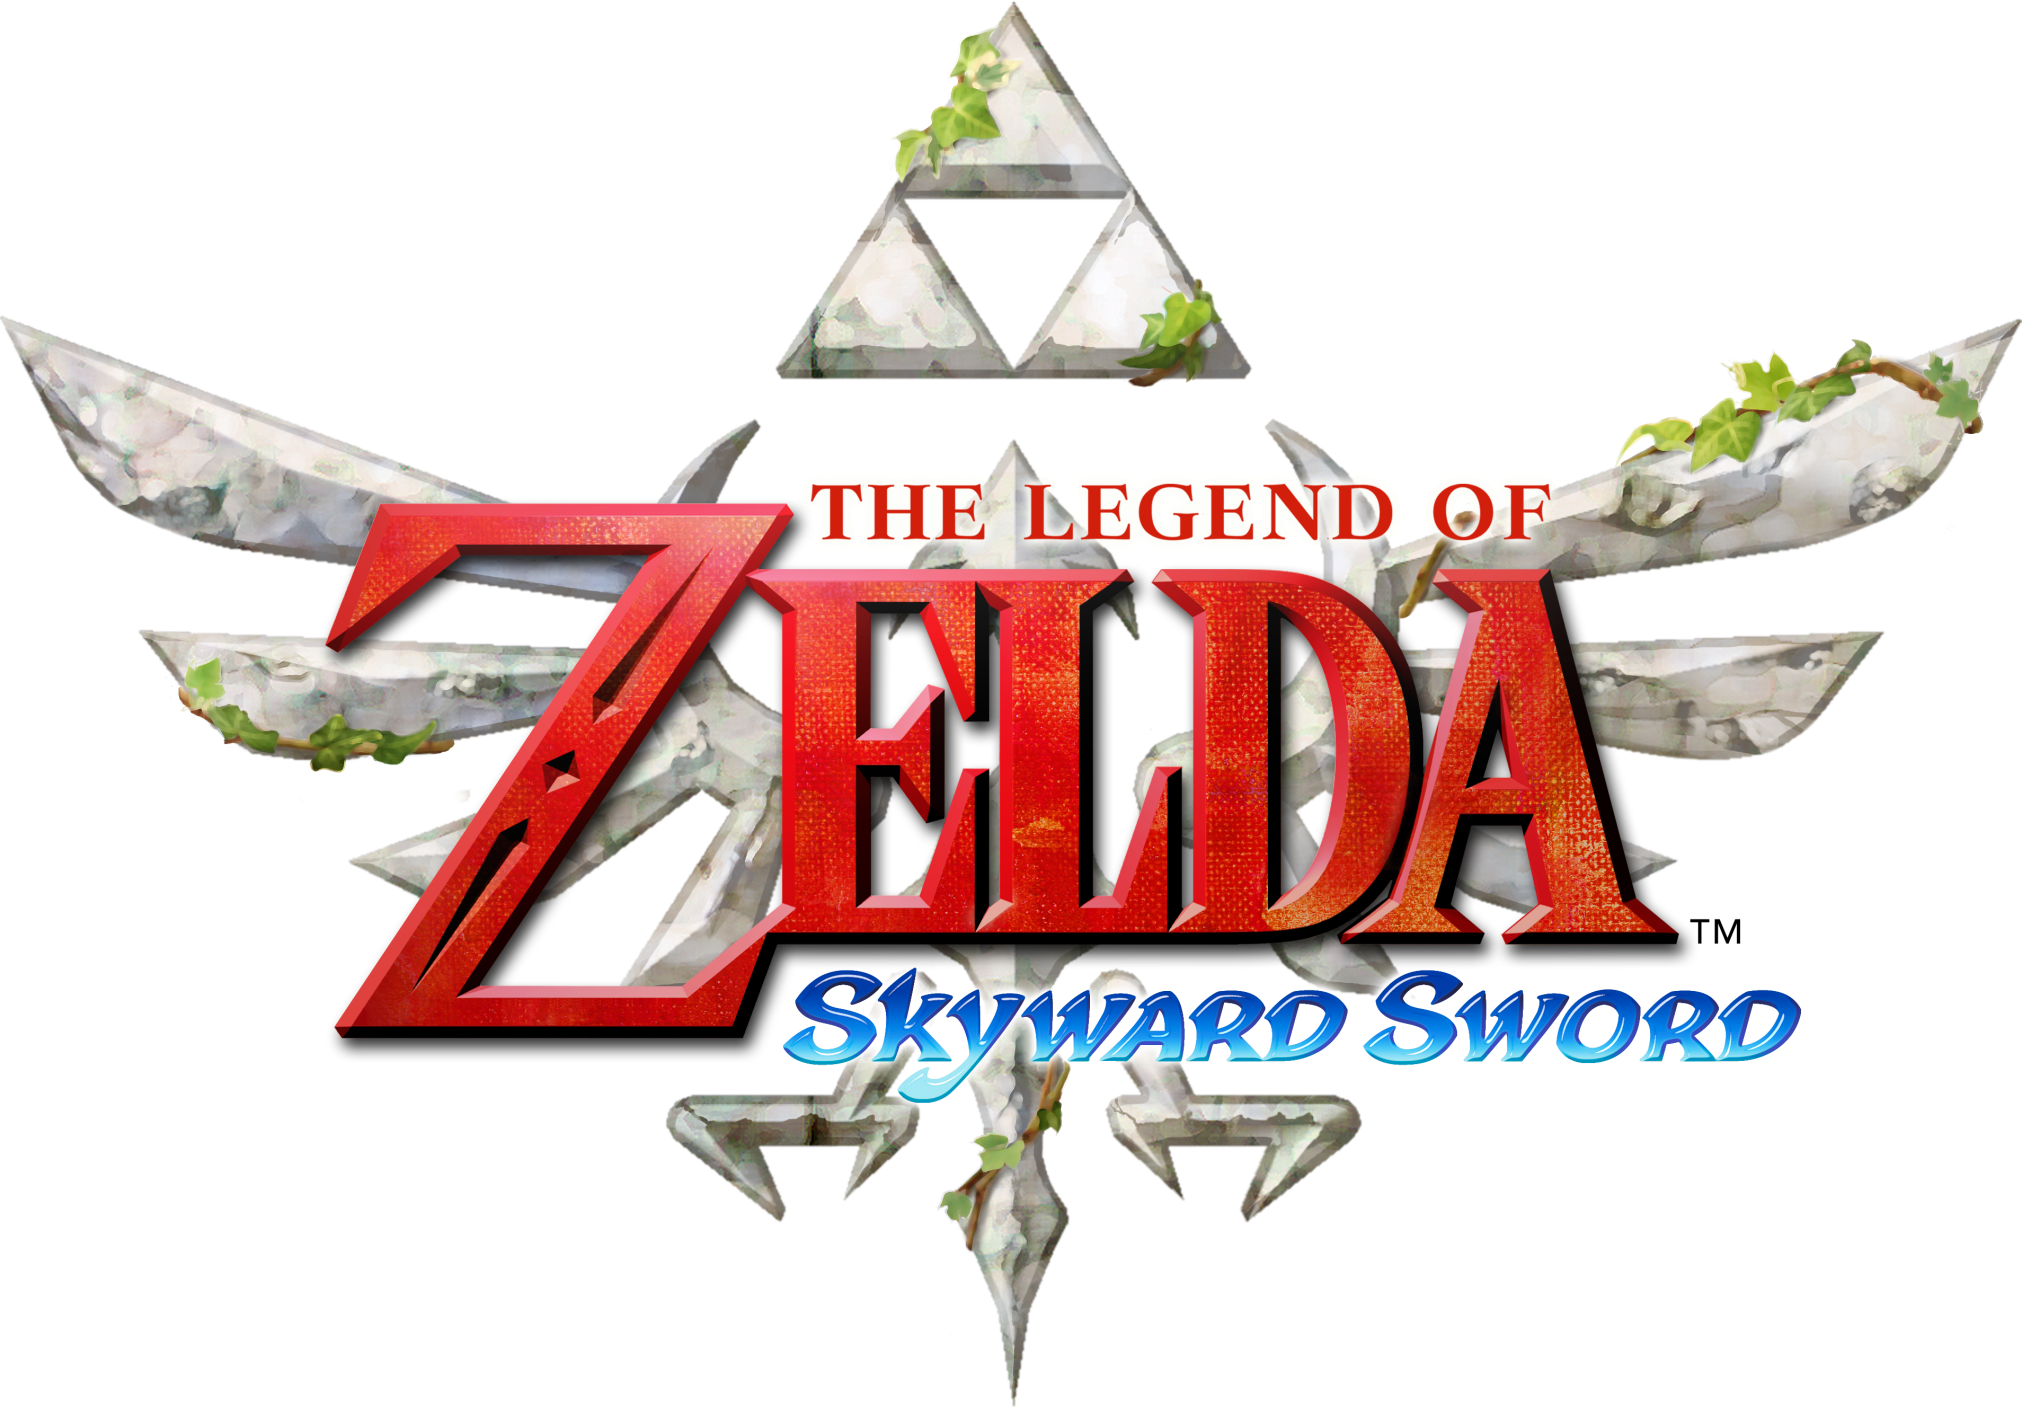 Let's celebrate The Legend of Zelda: The Wind Waker's 21st